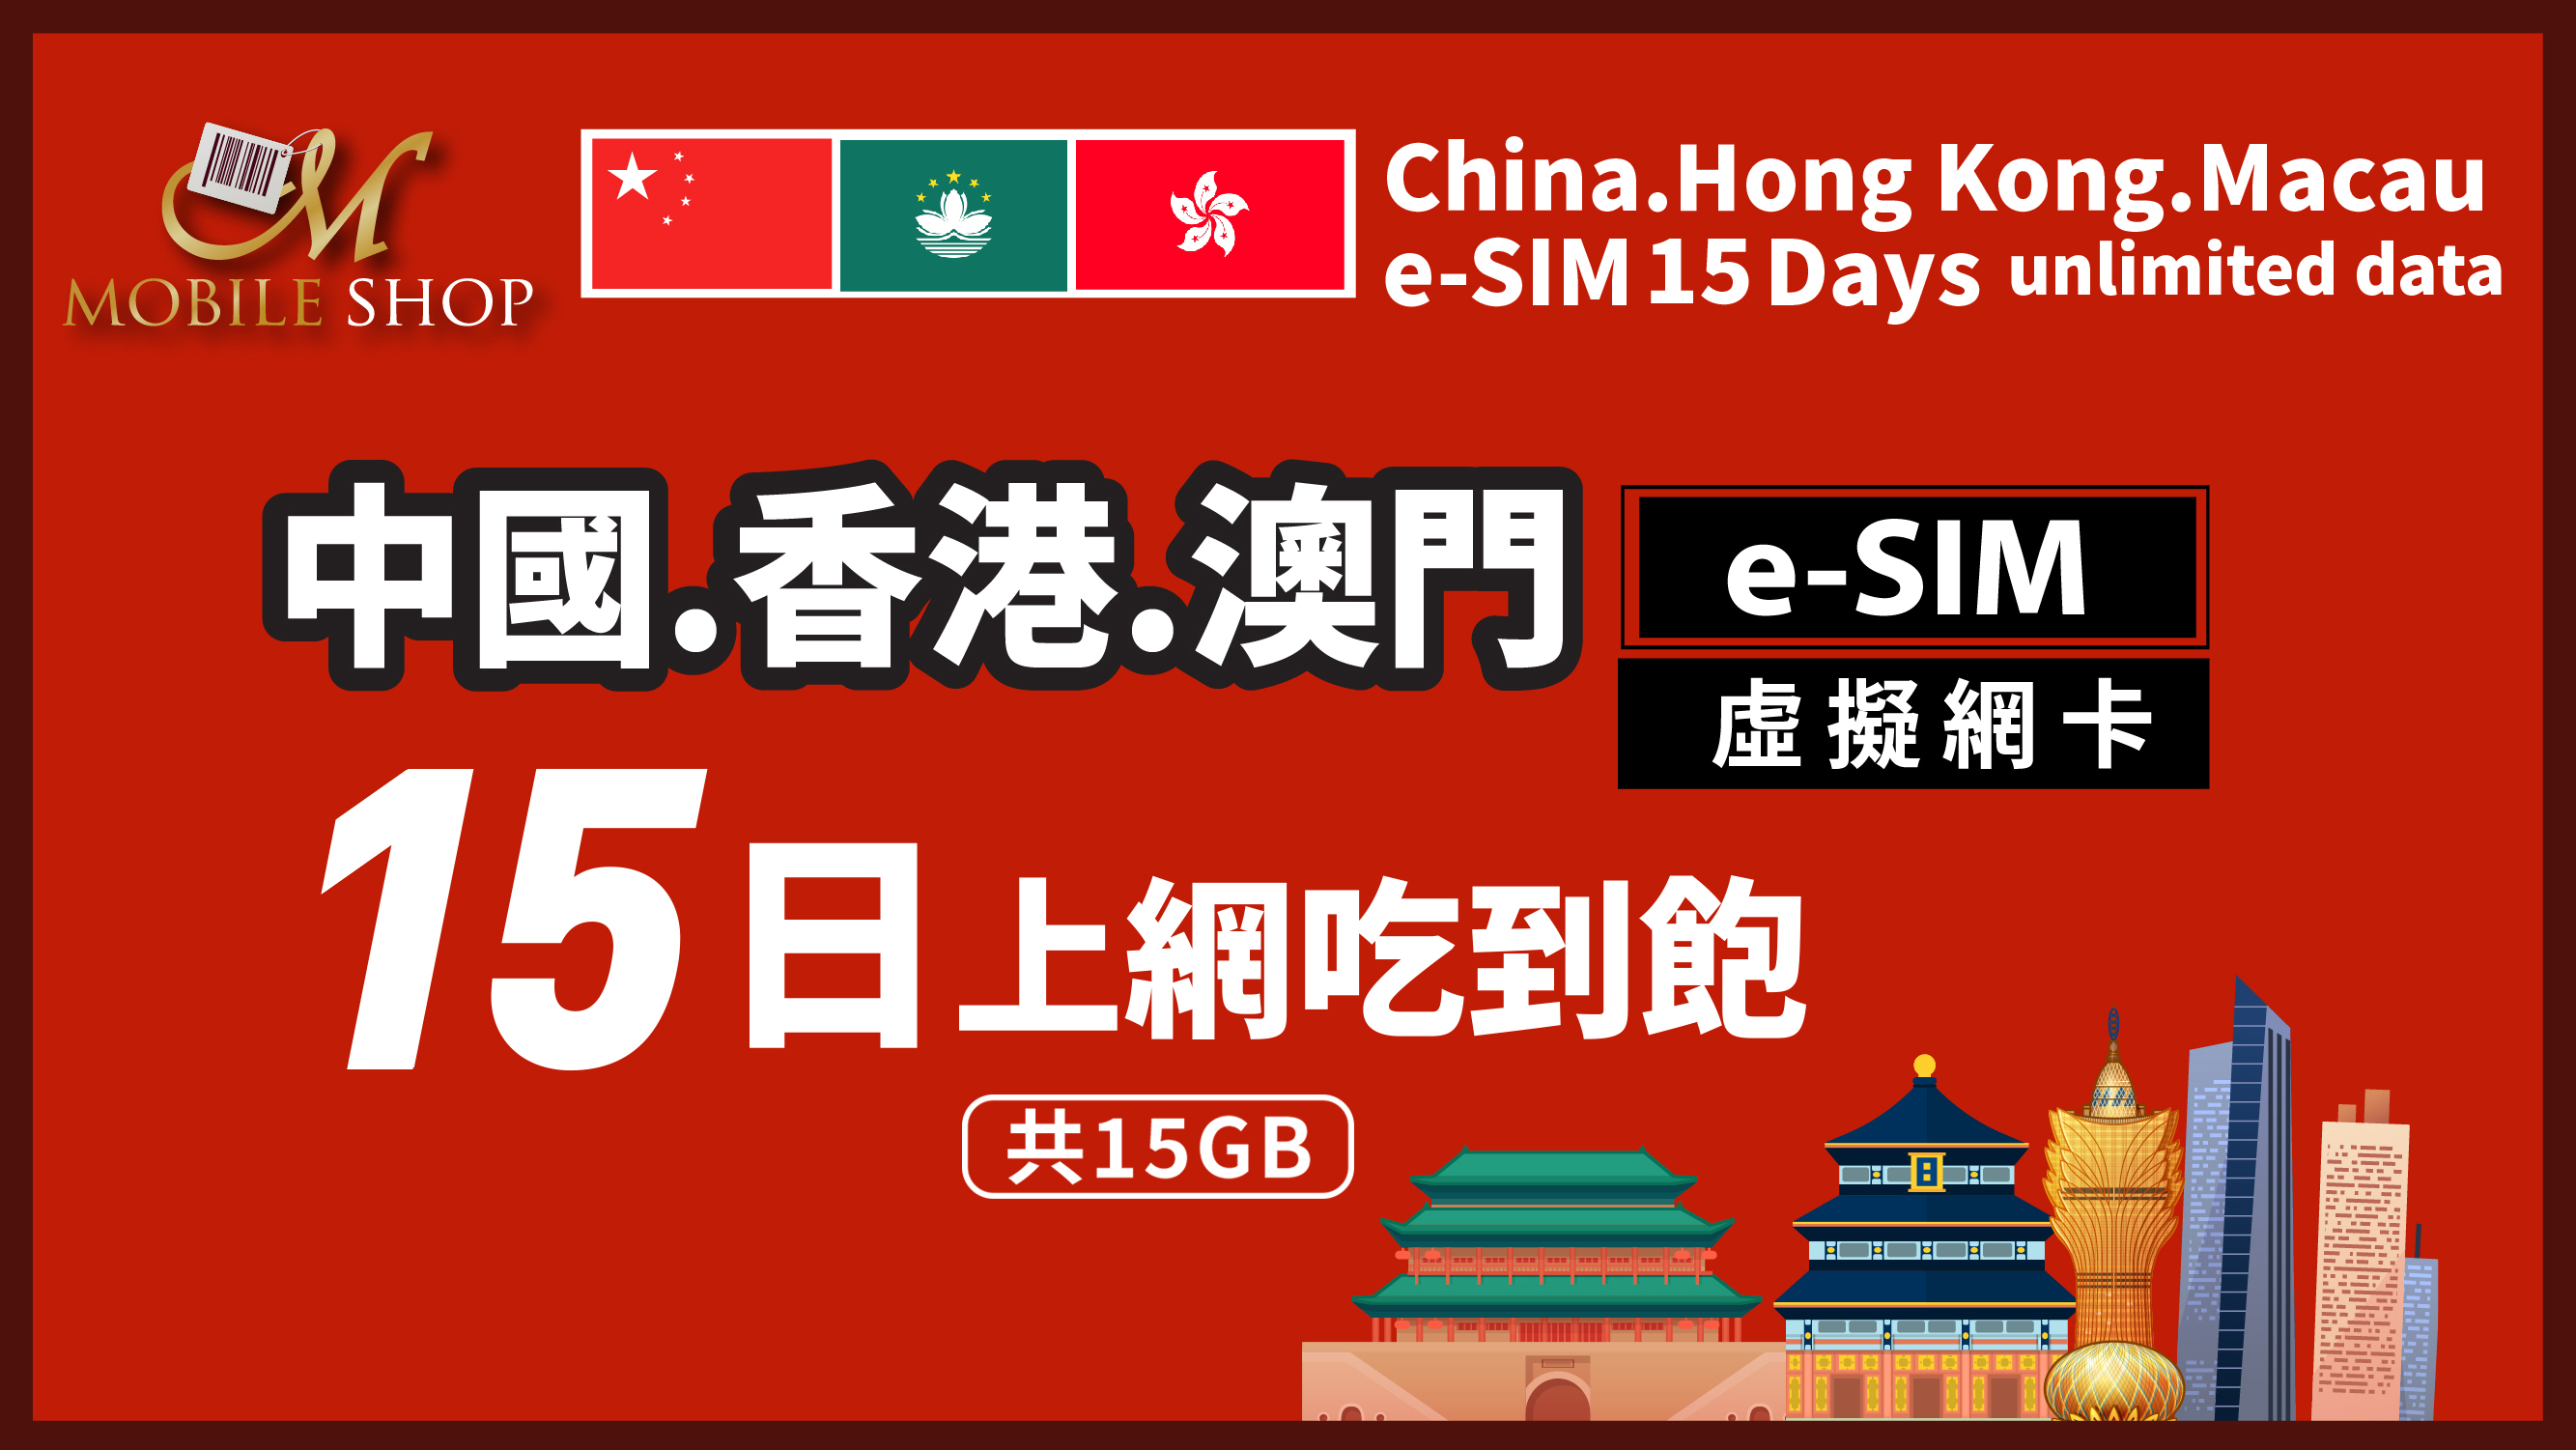 eSIM_China.Hong Kong.Macau-15Days/15GB unlimited data